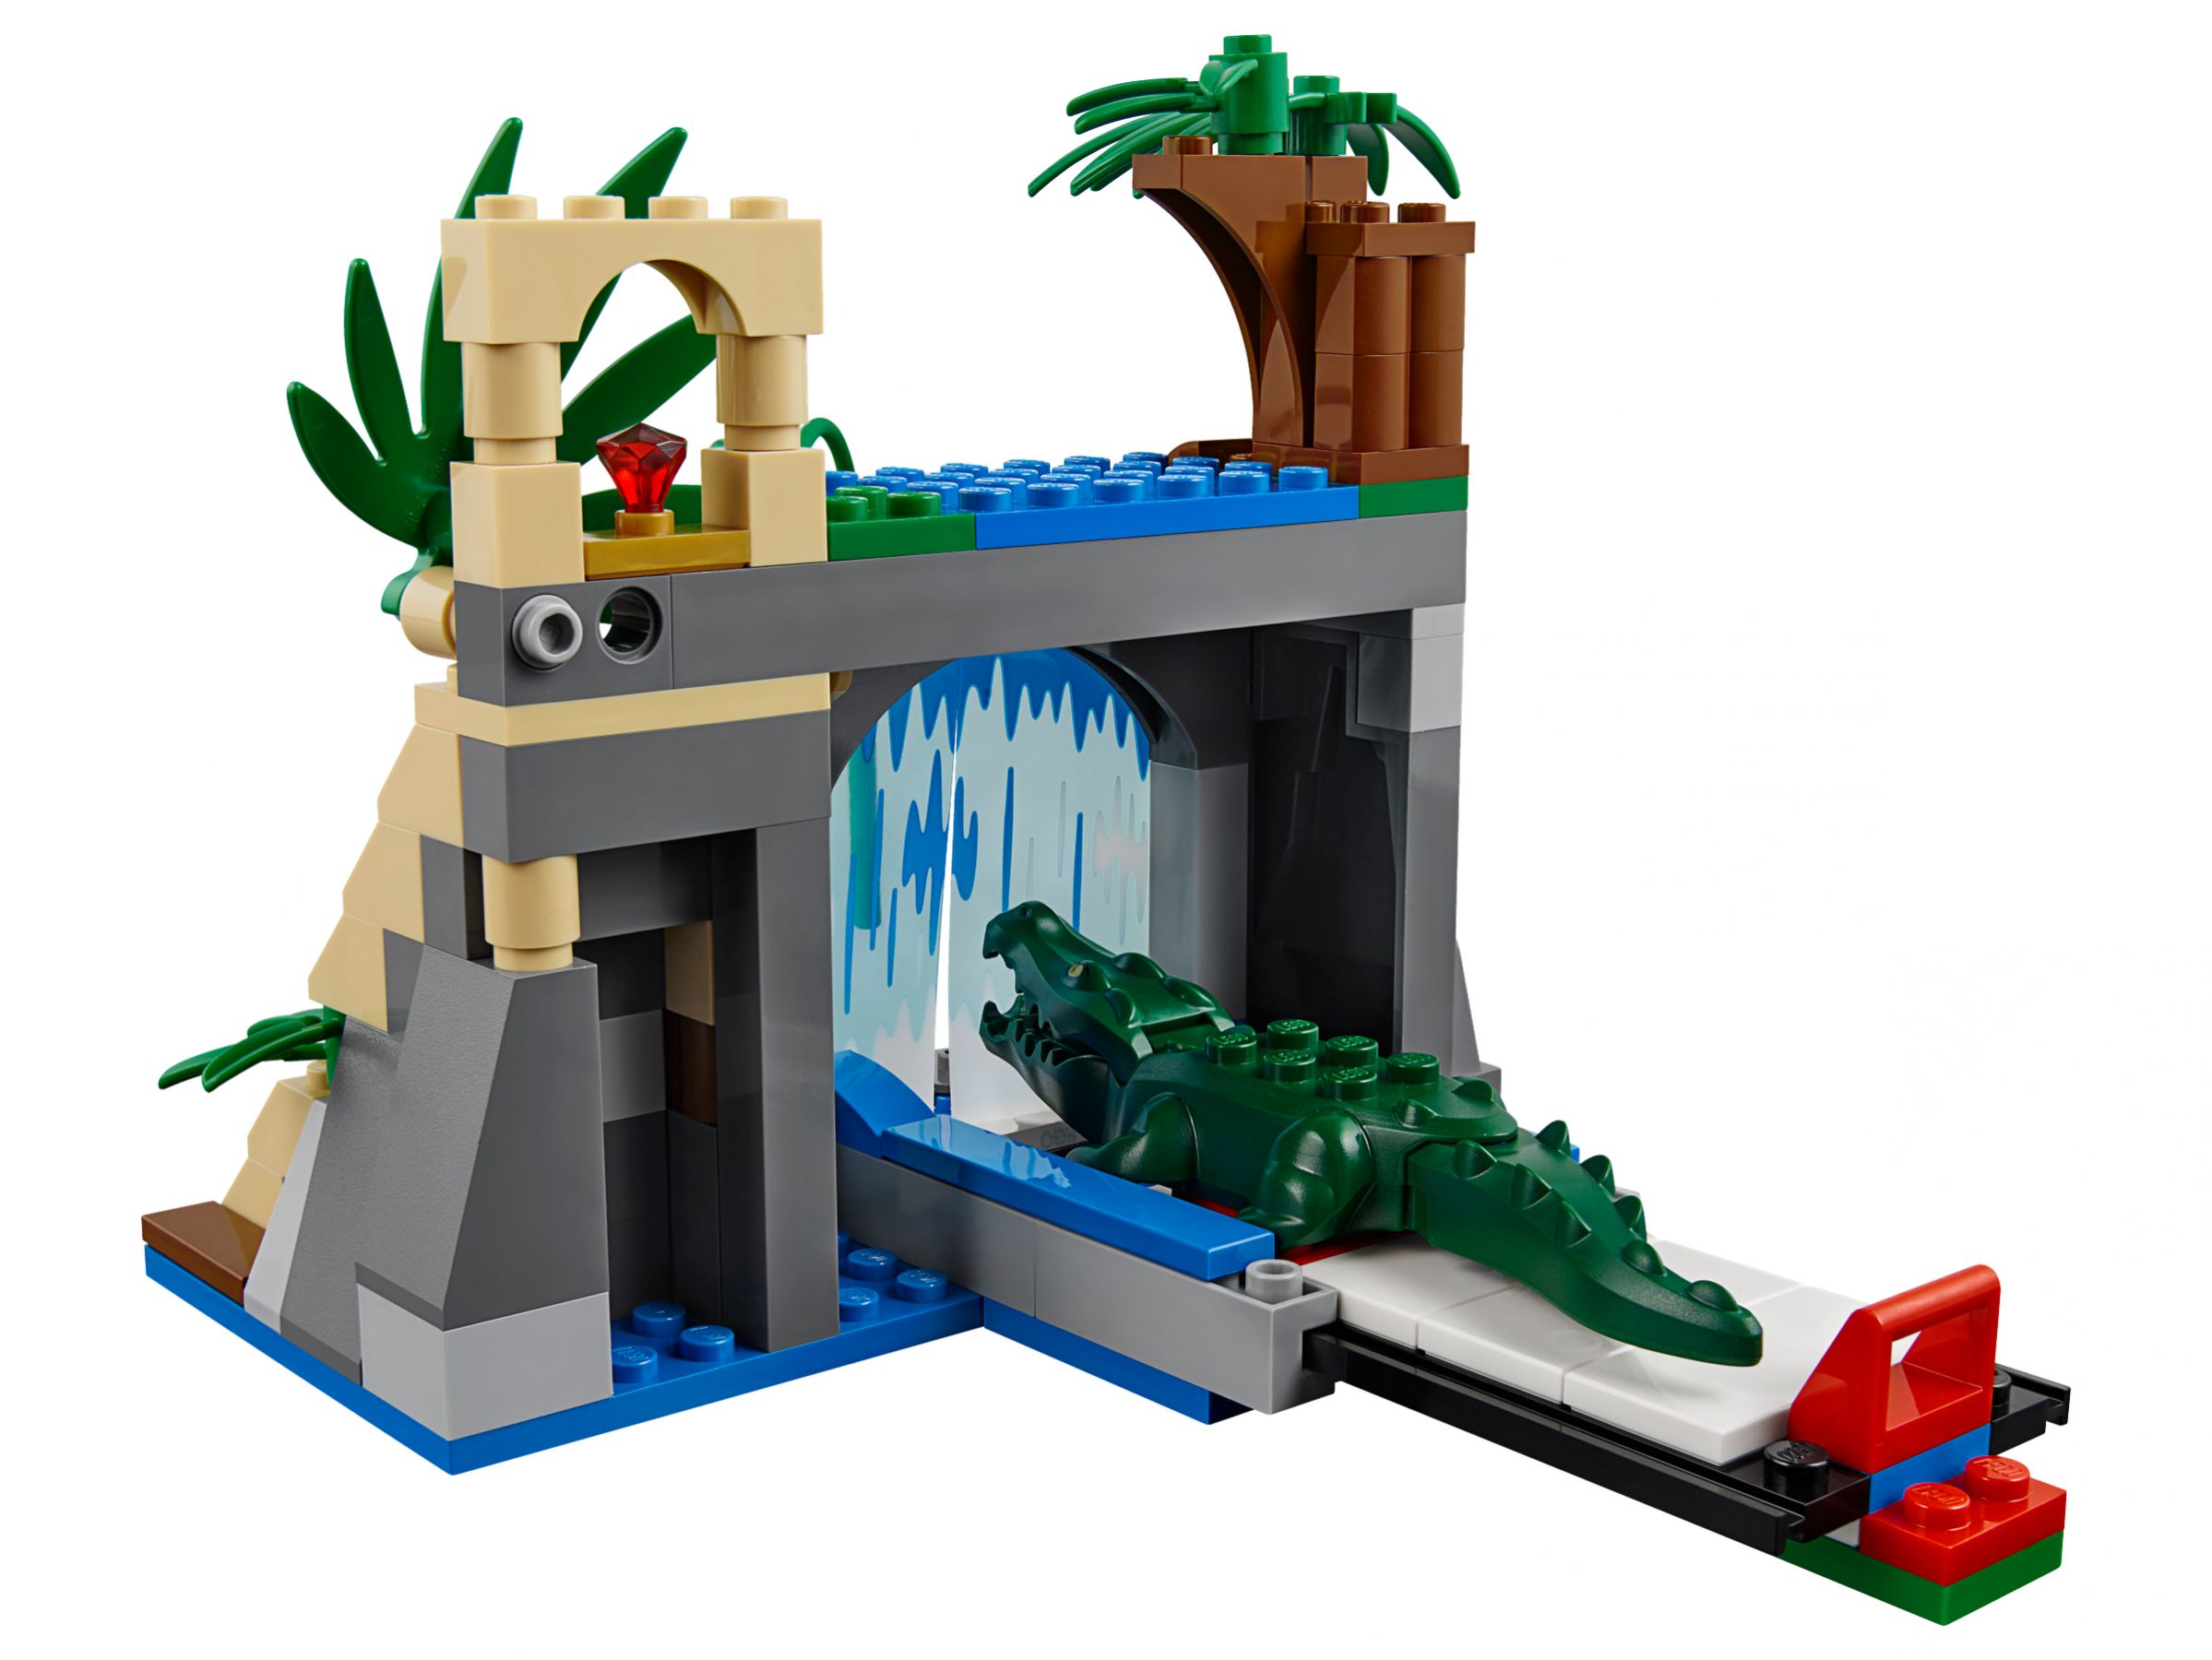 LEGO City 60160 Mobiles Dschungel-Labor LEGO_60160_alt6.jpg